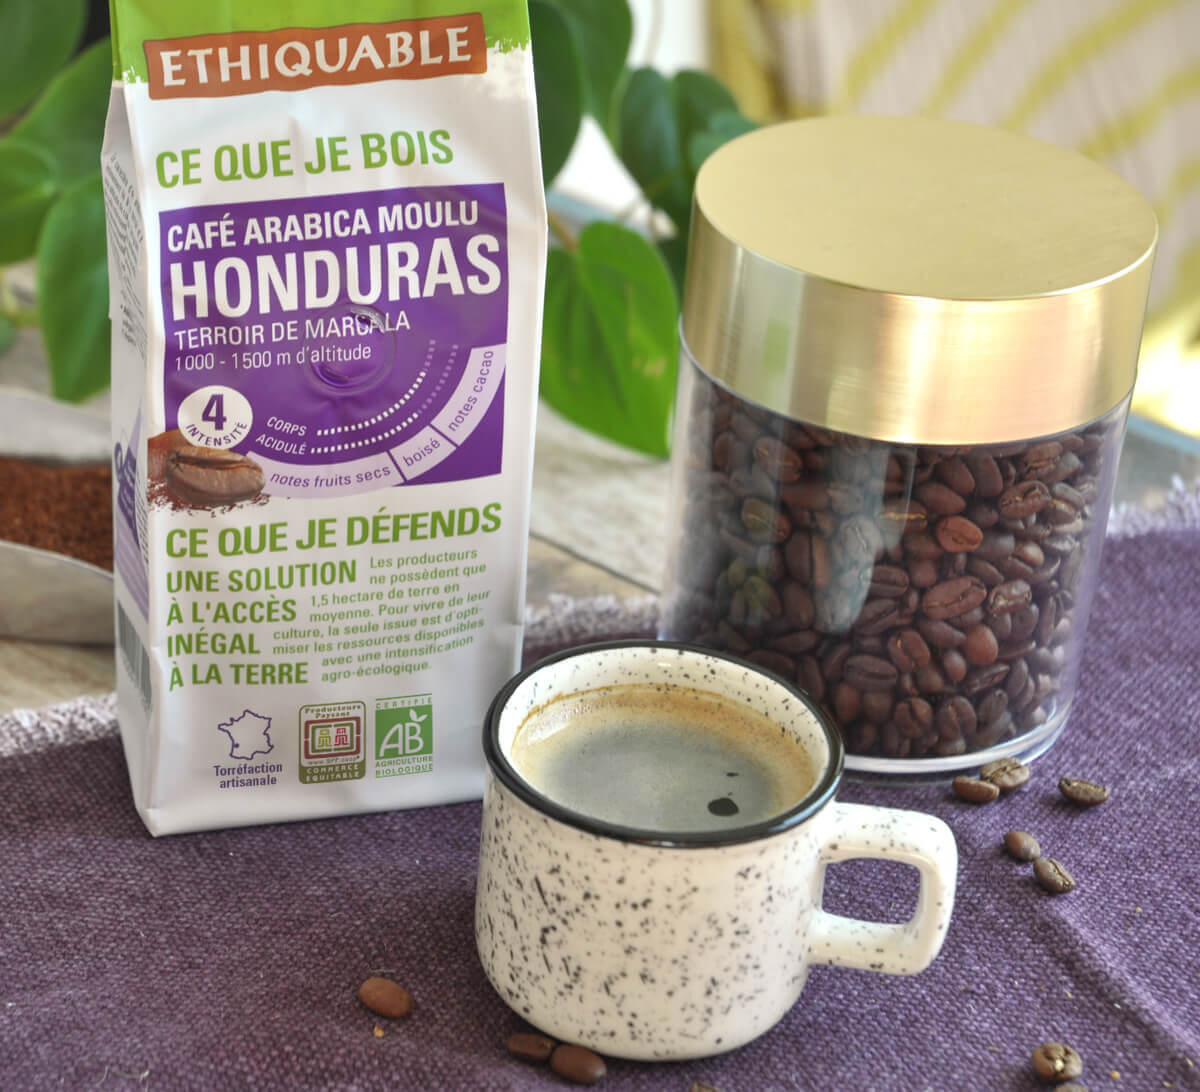 ethiquable-cafe-moulu-honduras-arabica-equitable-bio